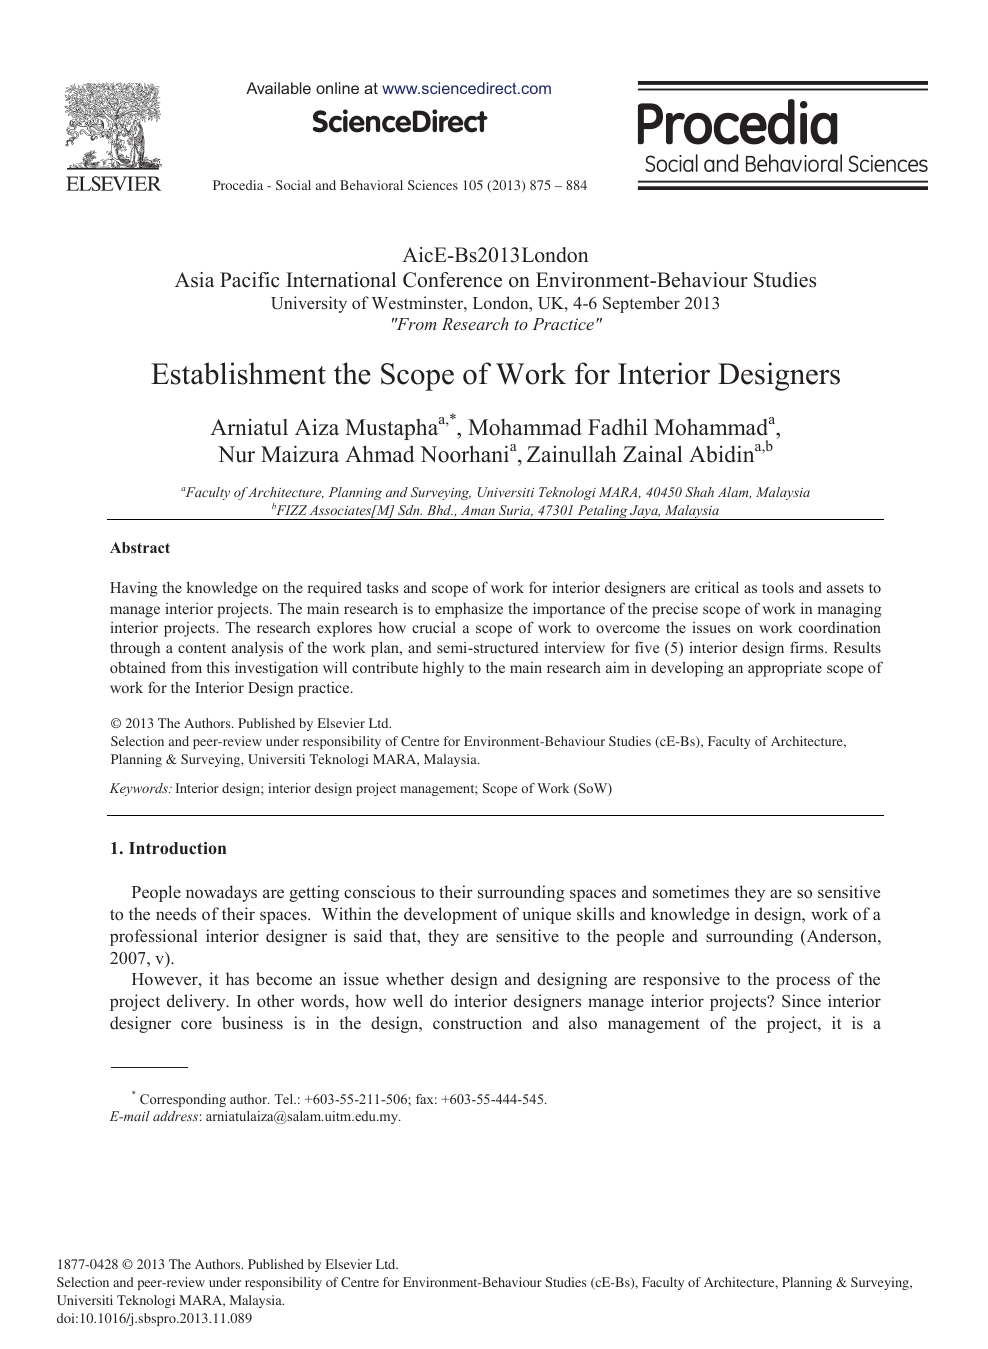 Establishment The Scope Of Work For Interior Designers